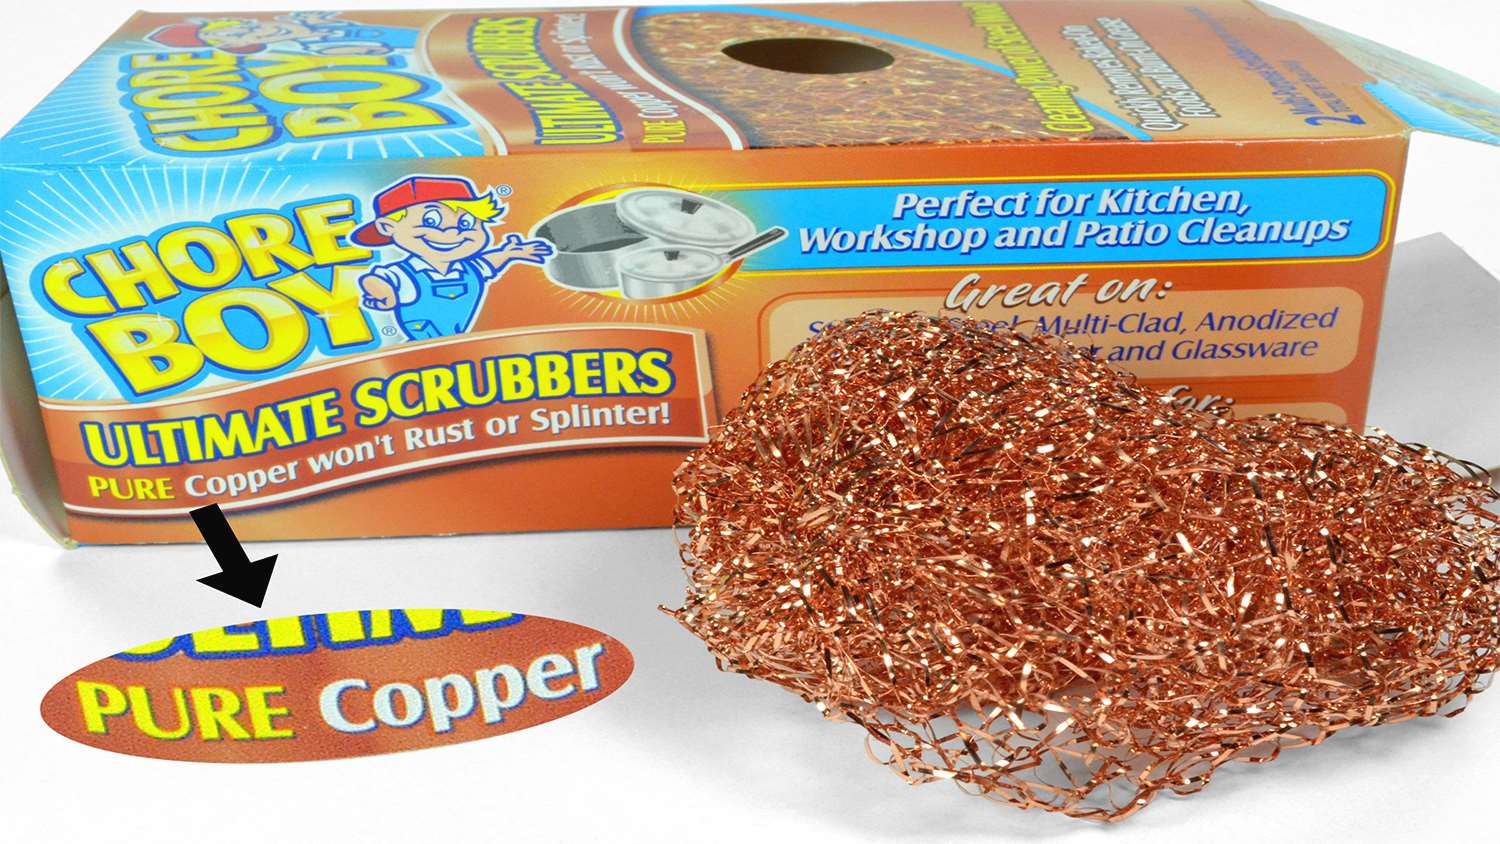 Chore Boy Pure Copper Ultimate Scrubber